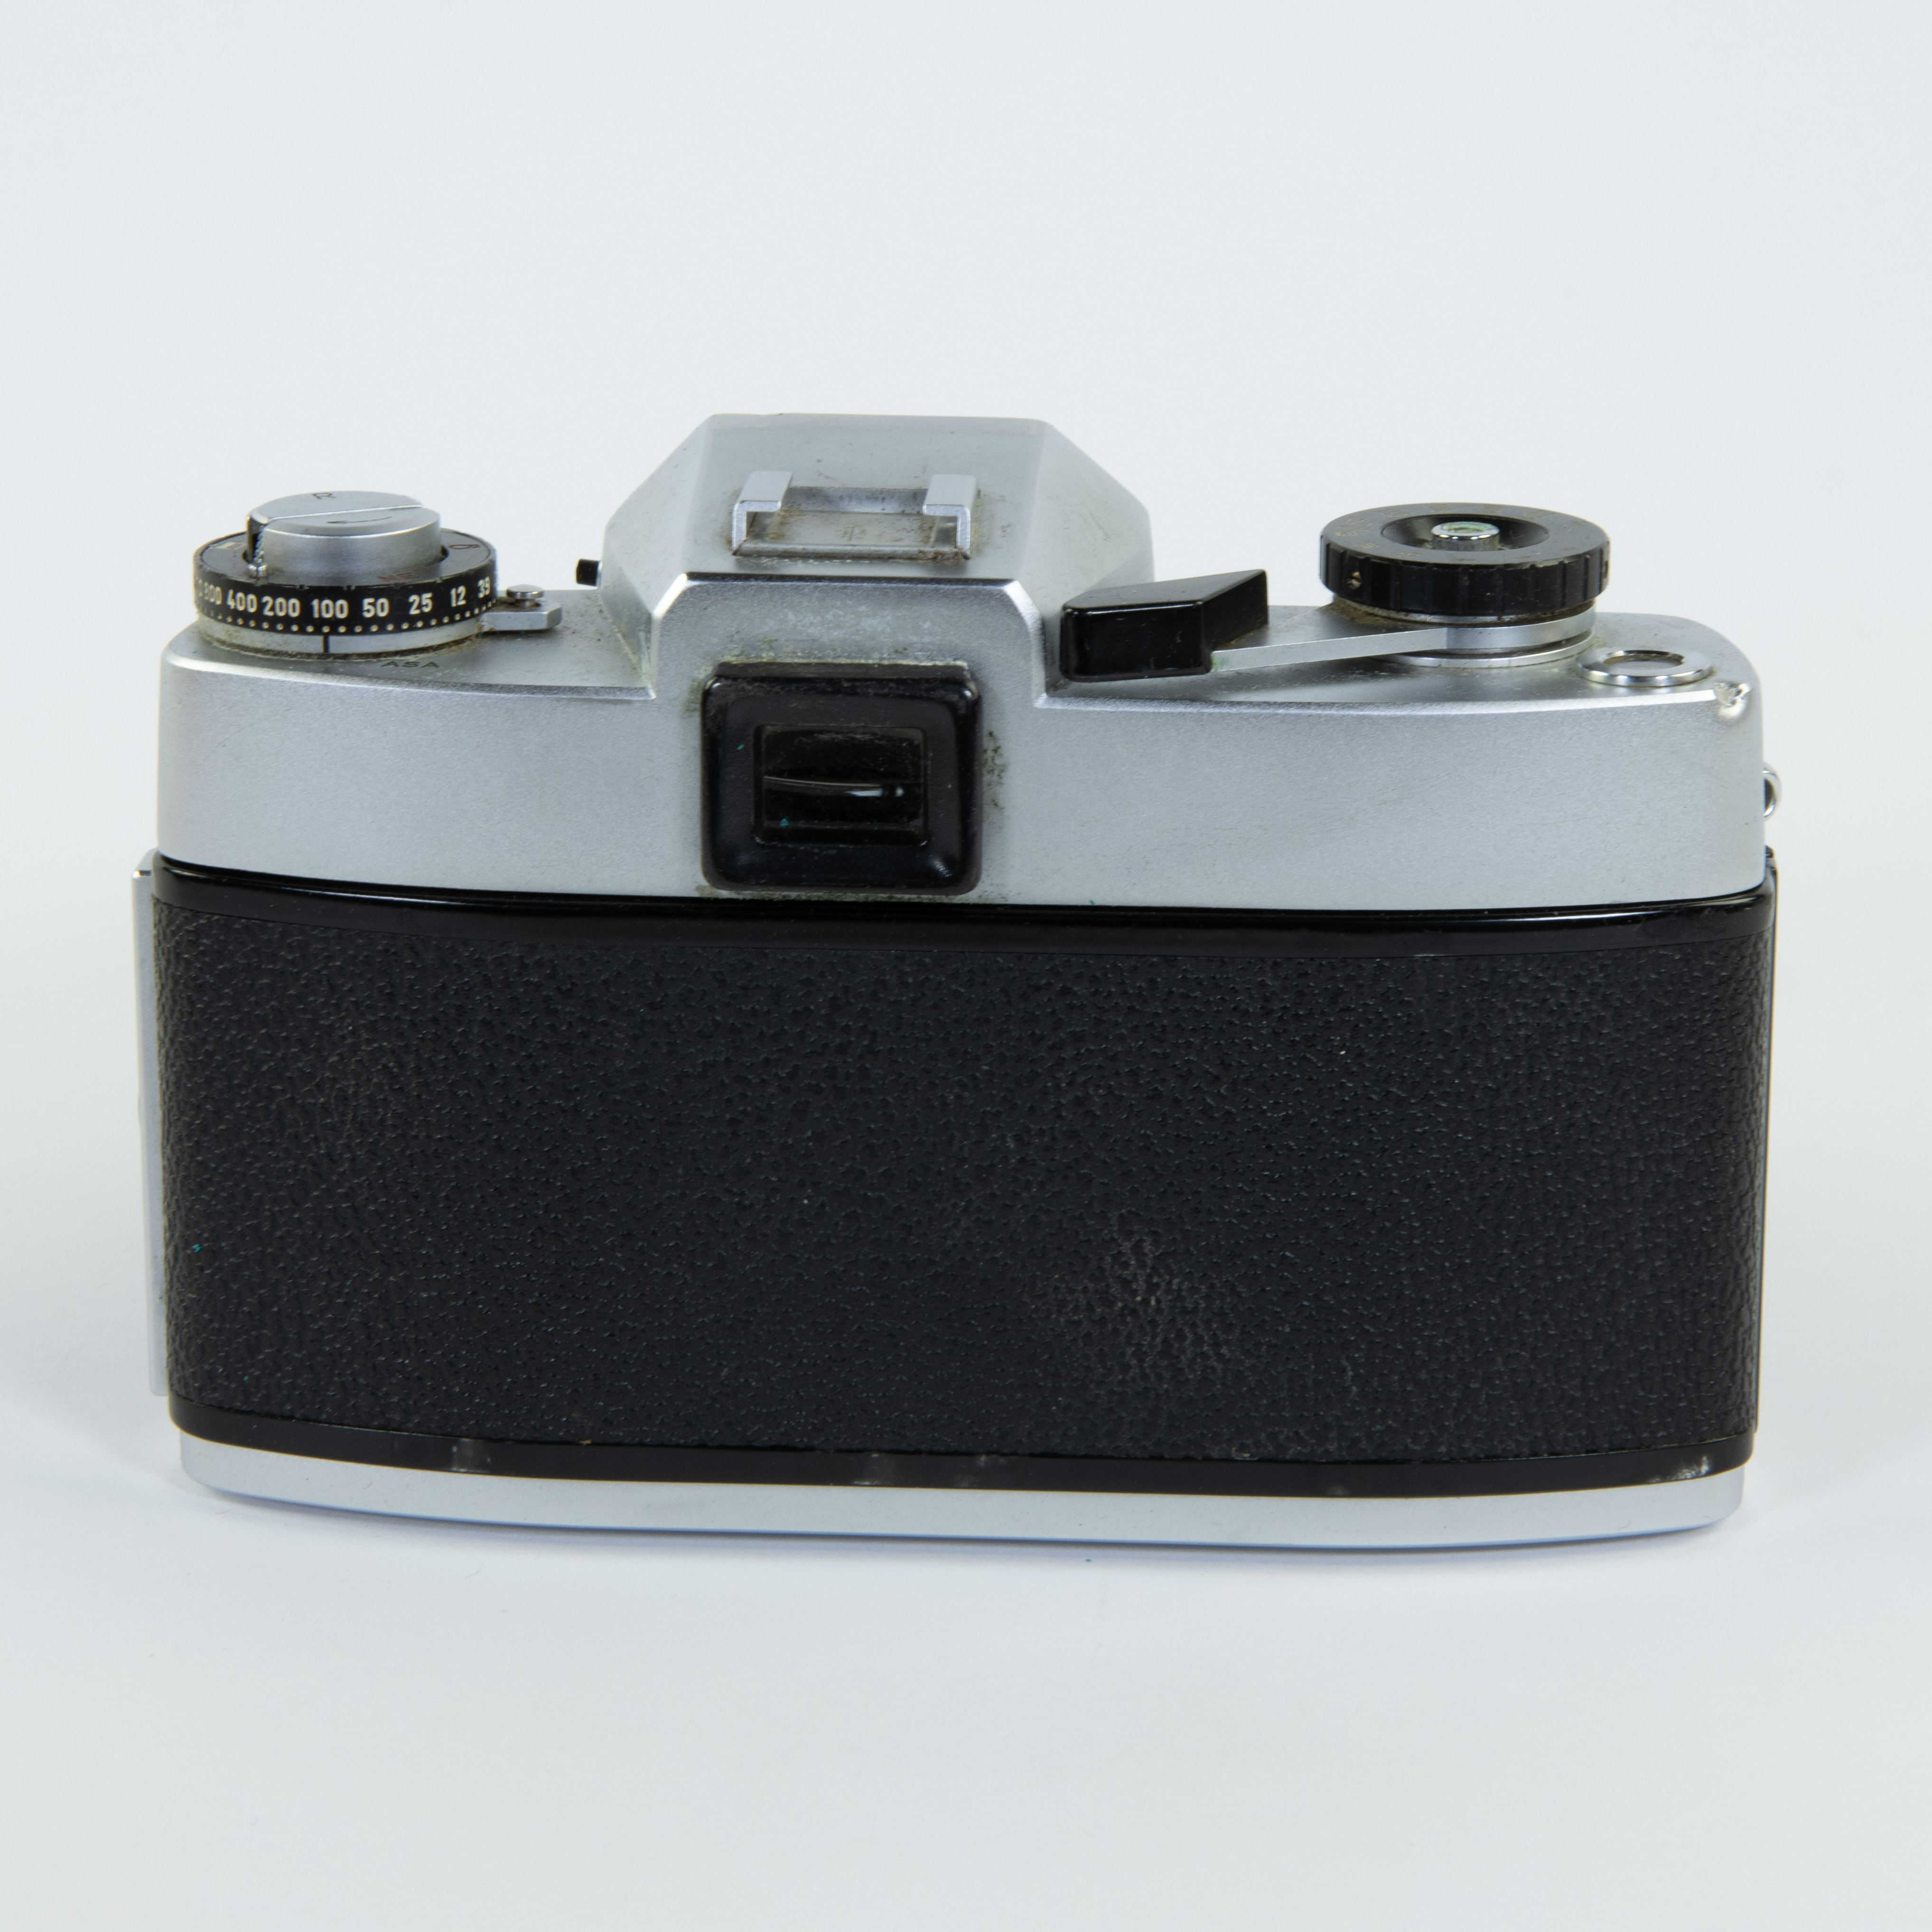 LEICAFLEX camera with accompanying telephoto lens - Image 5 of 11